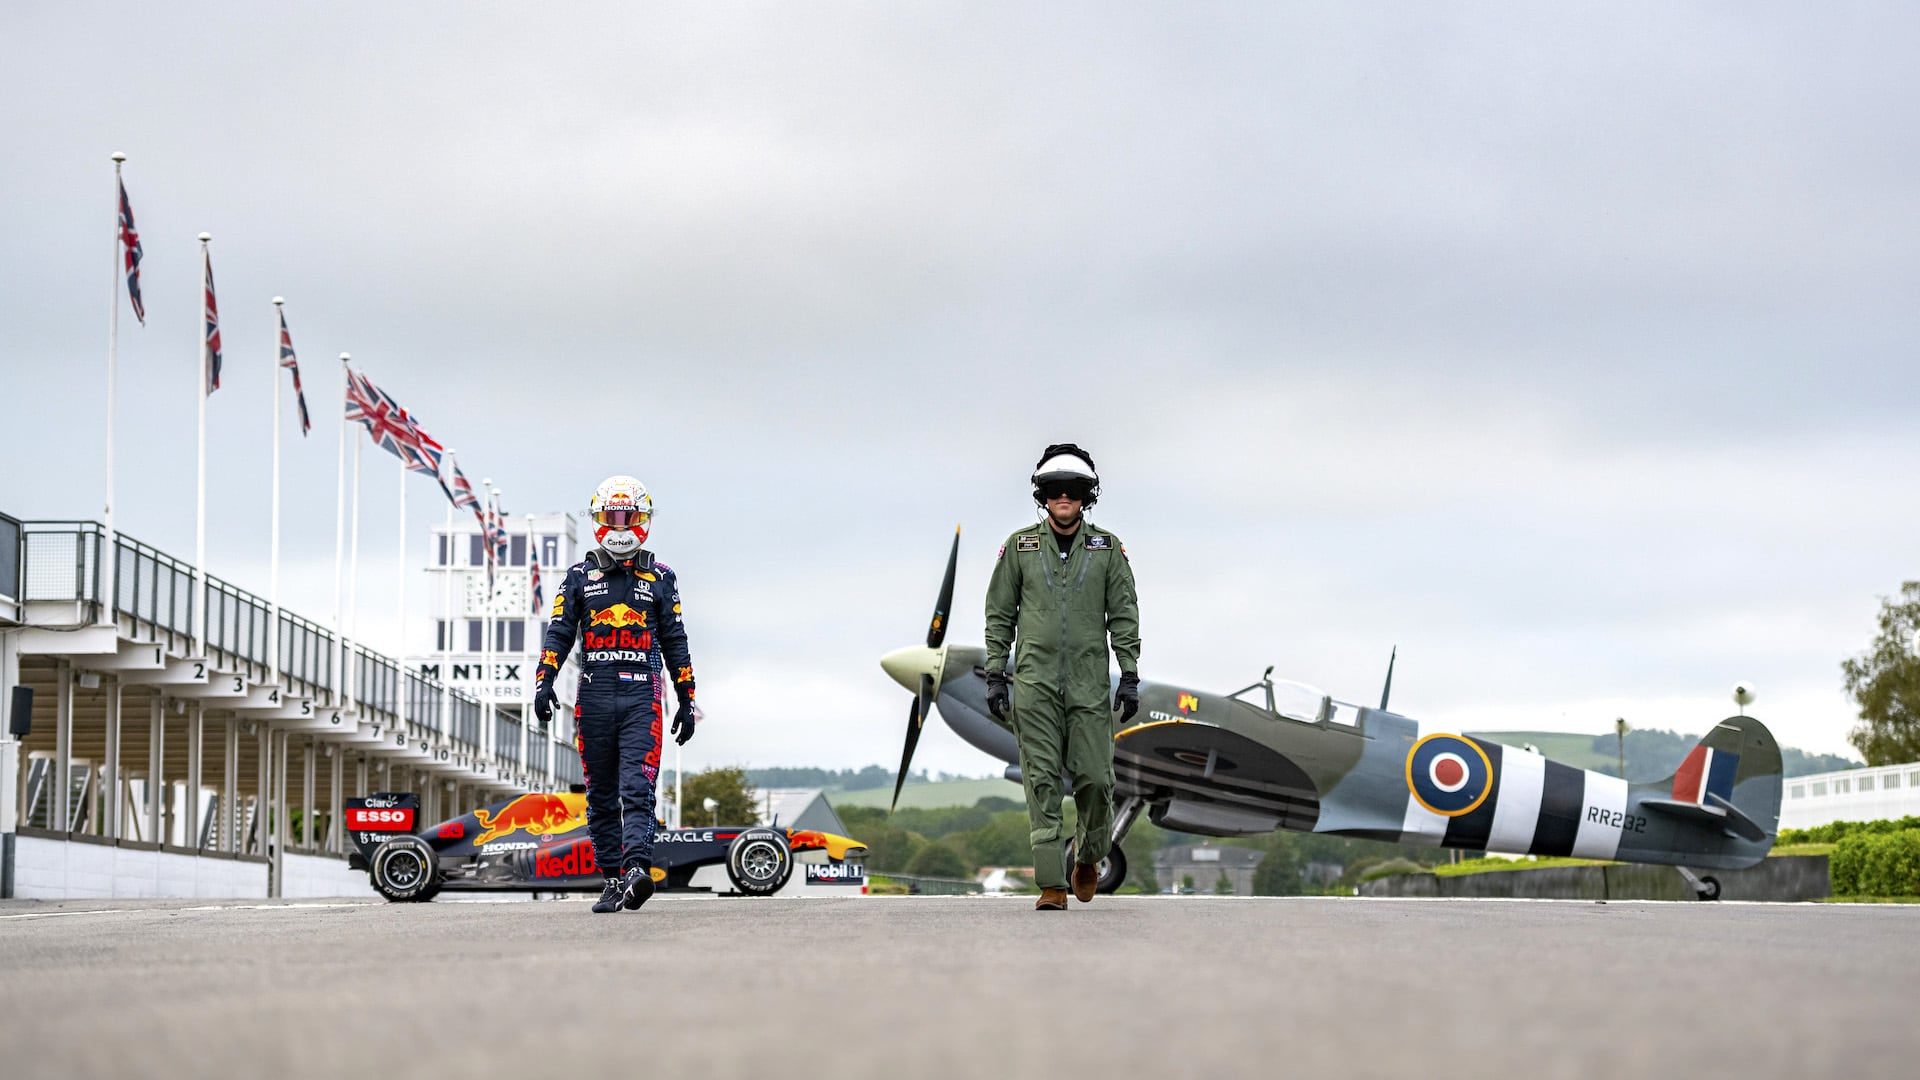 Red Bull F1 versus Spitfire